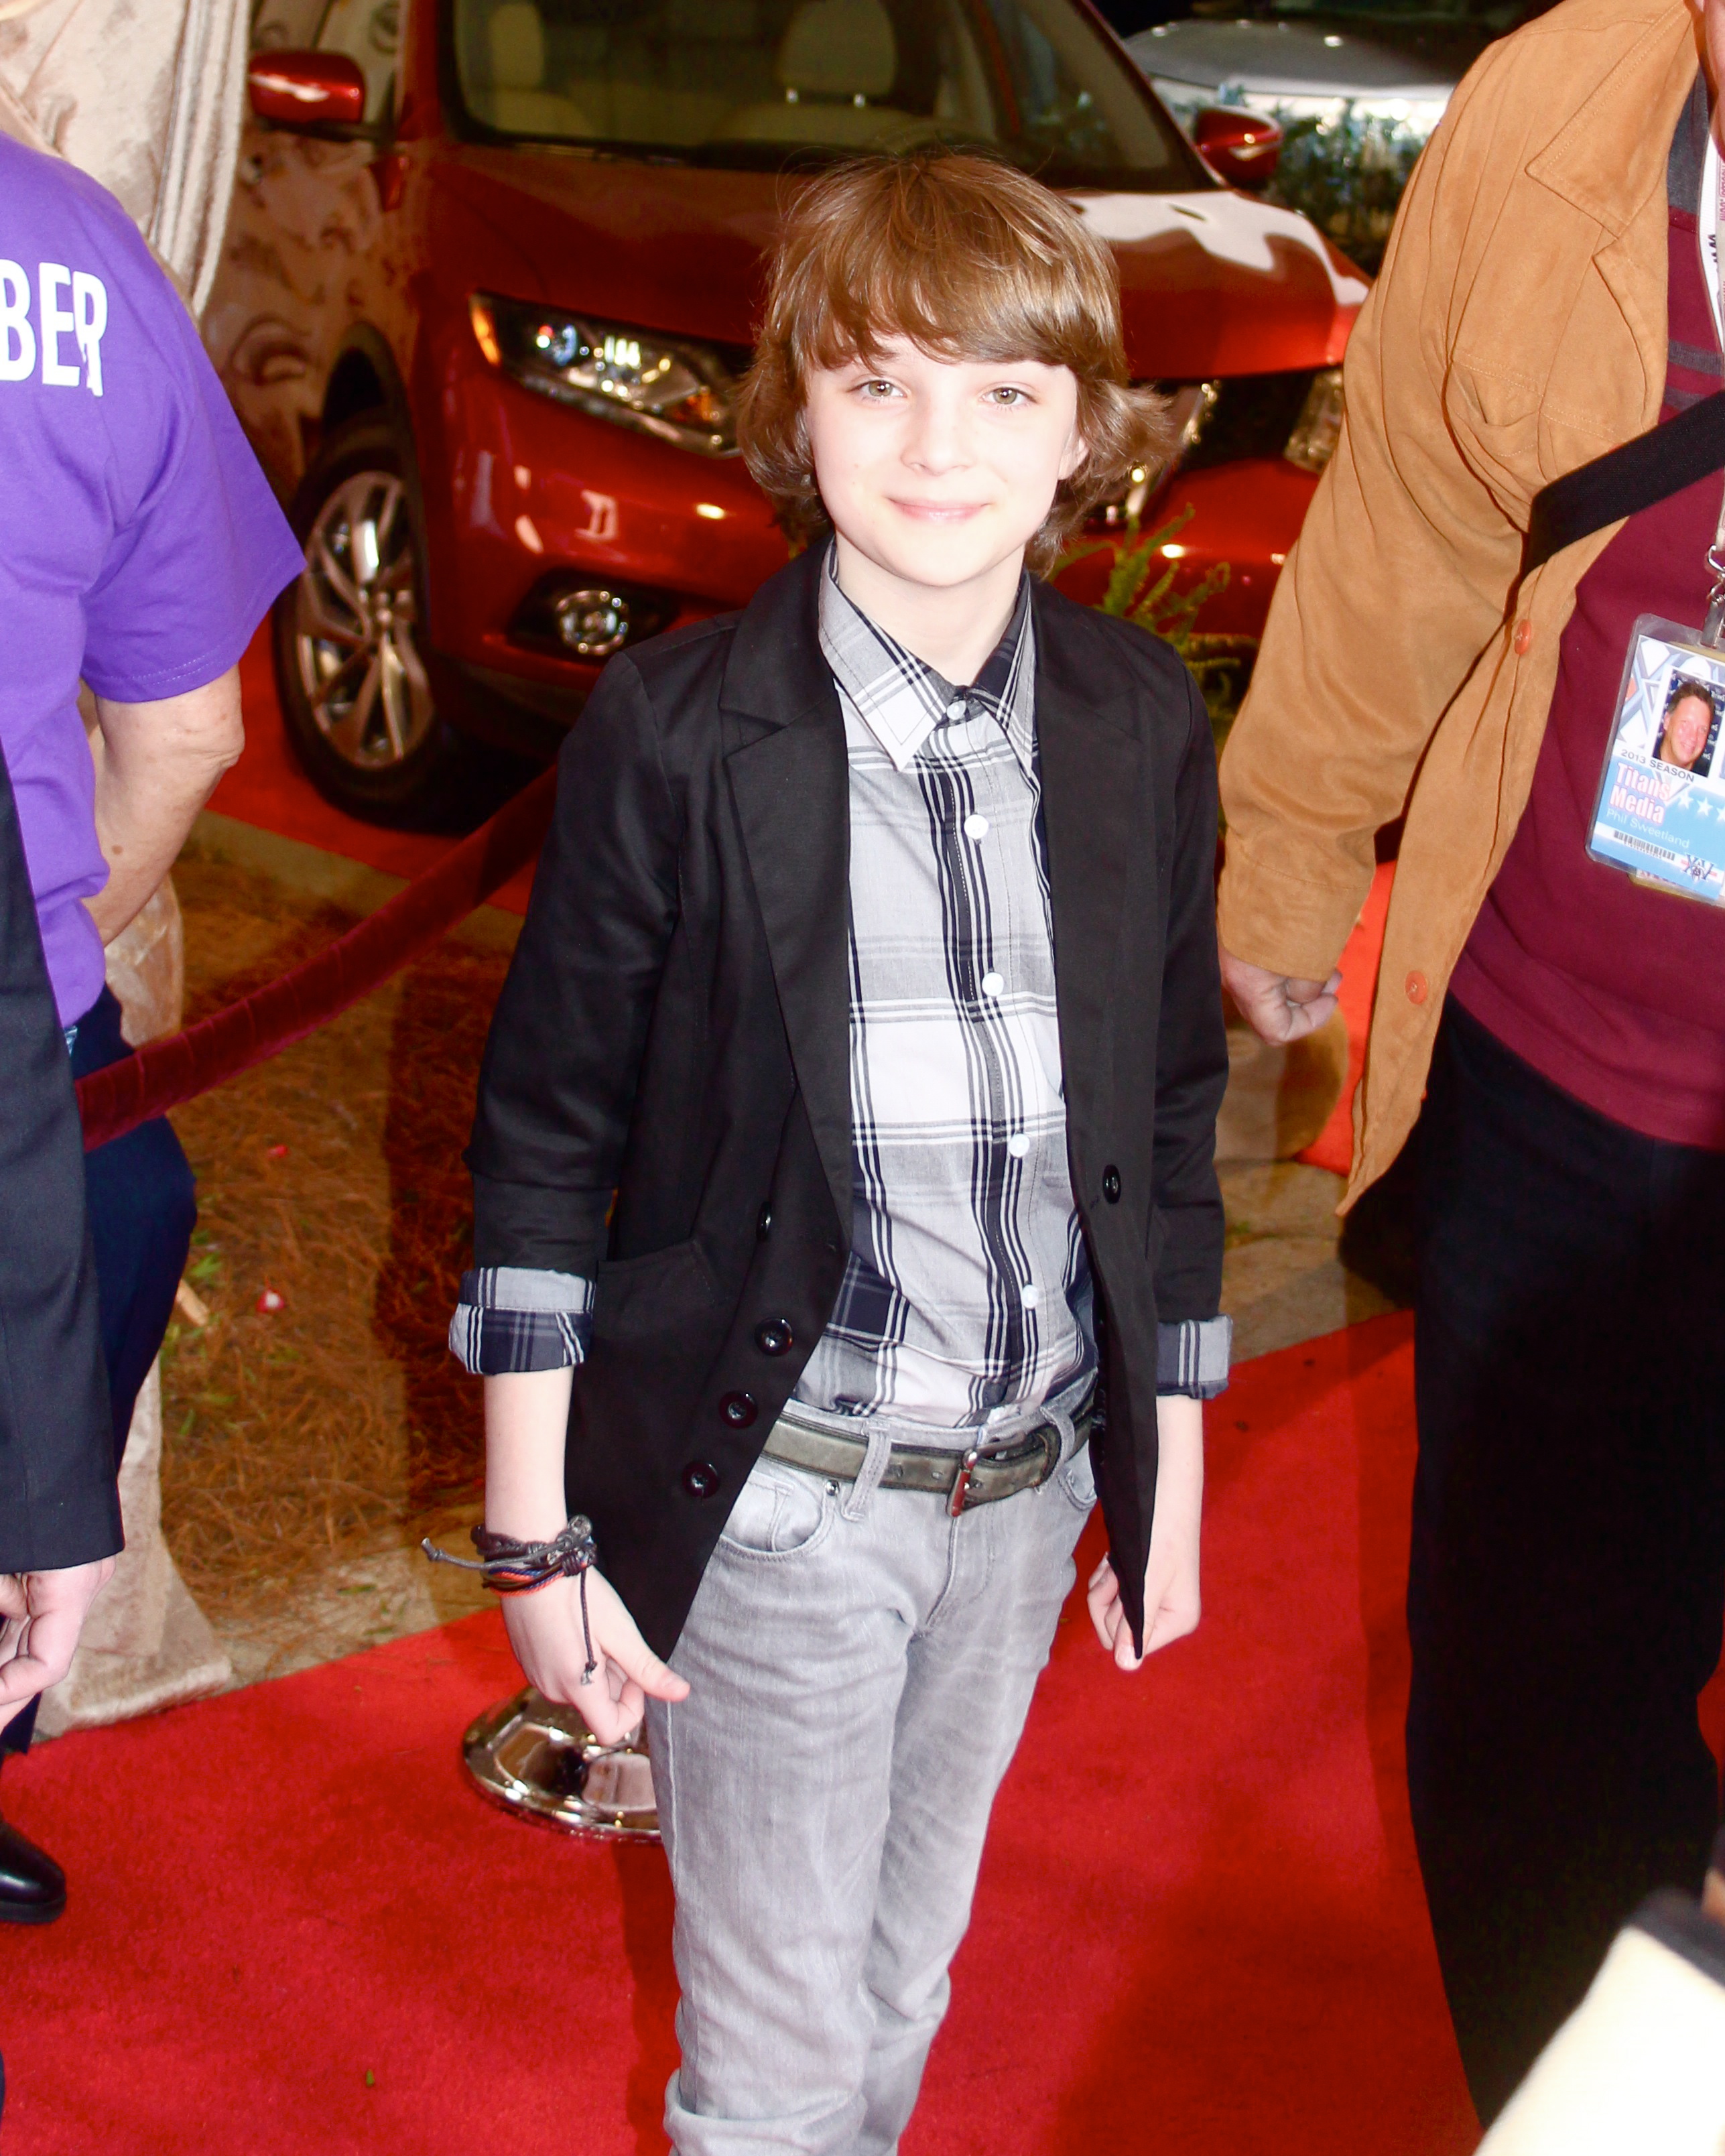 On the red carpet at the 2014 Nashville Film Festival